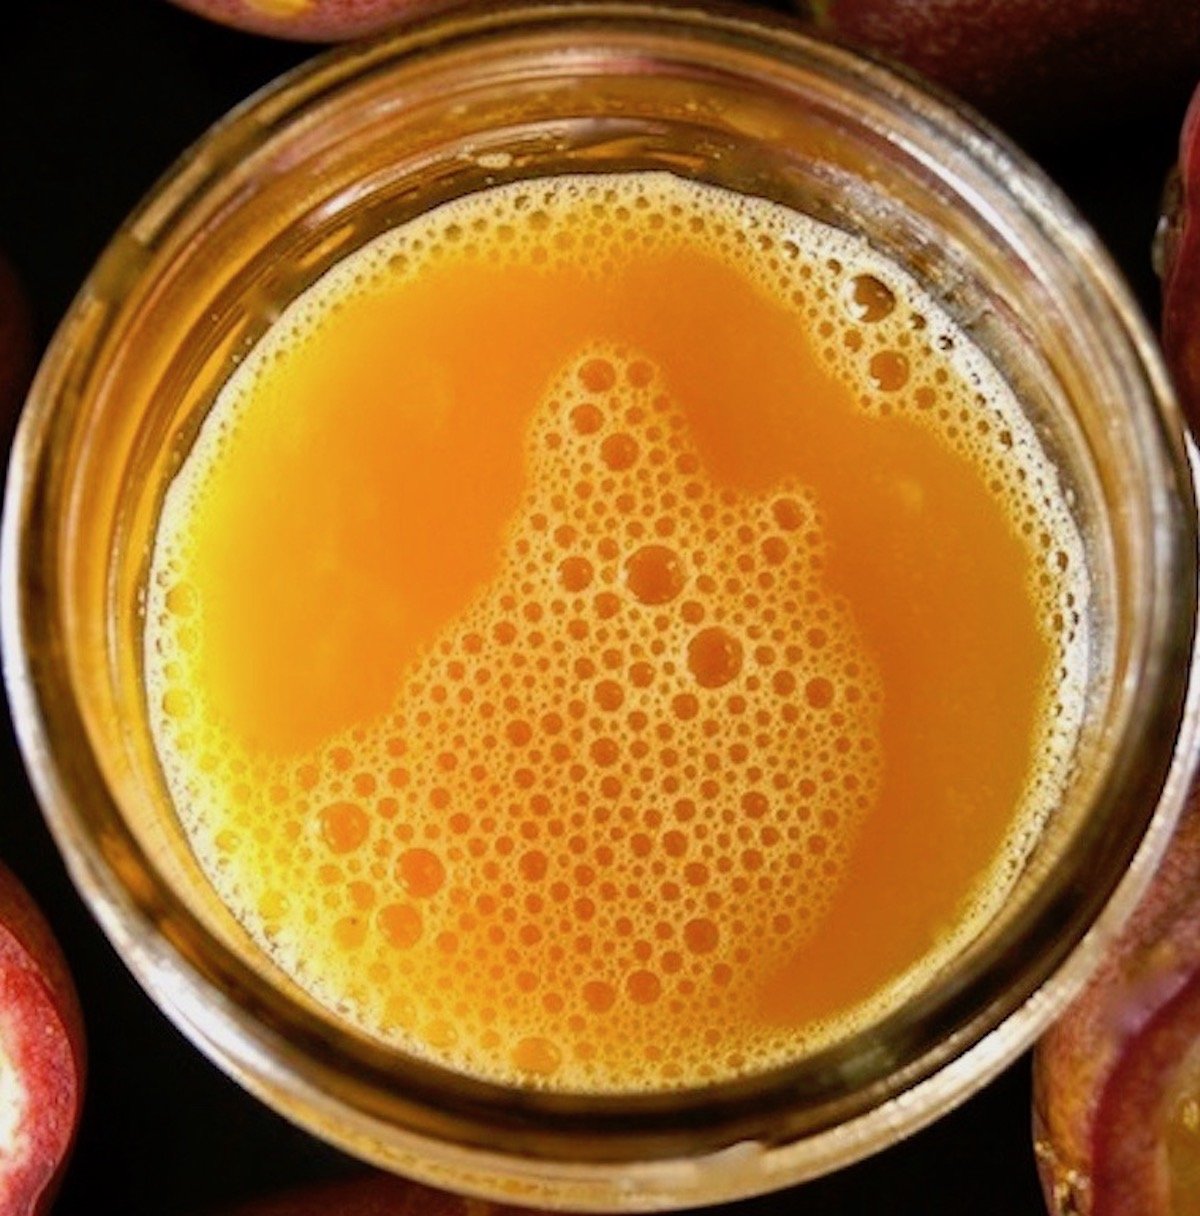 Top view of bowl of jar of orange passion fruit juice.